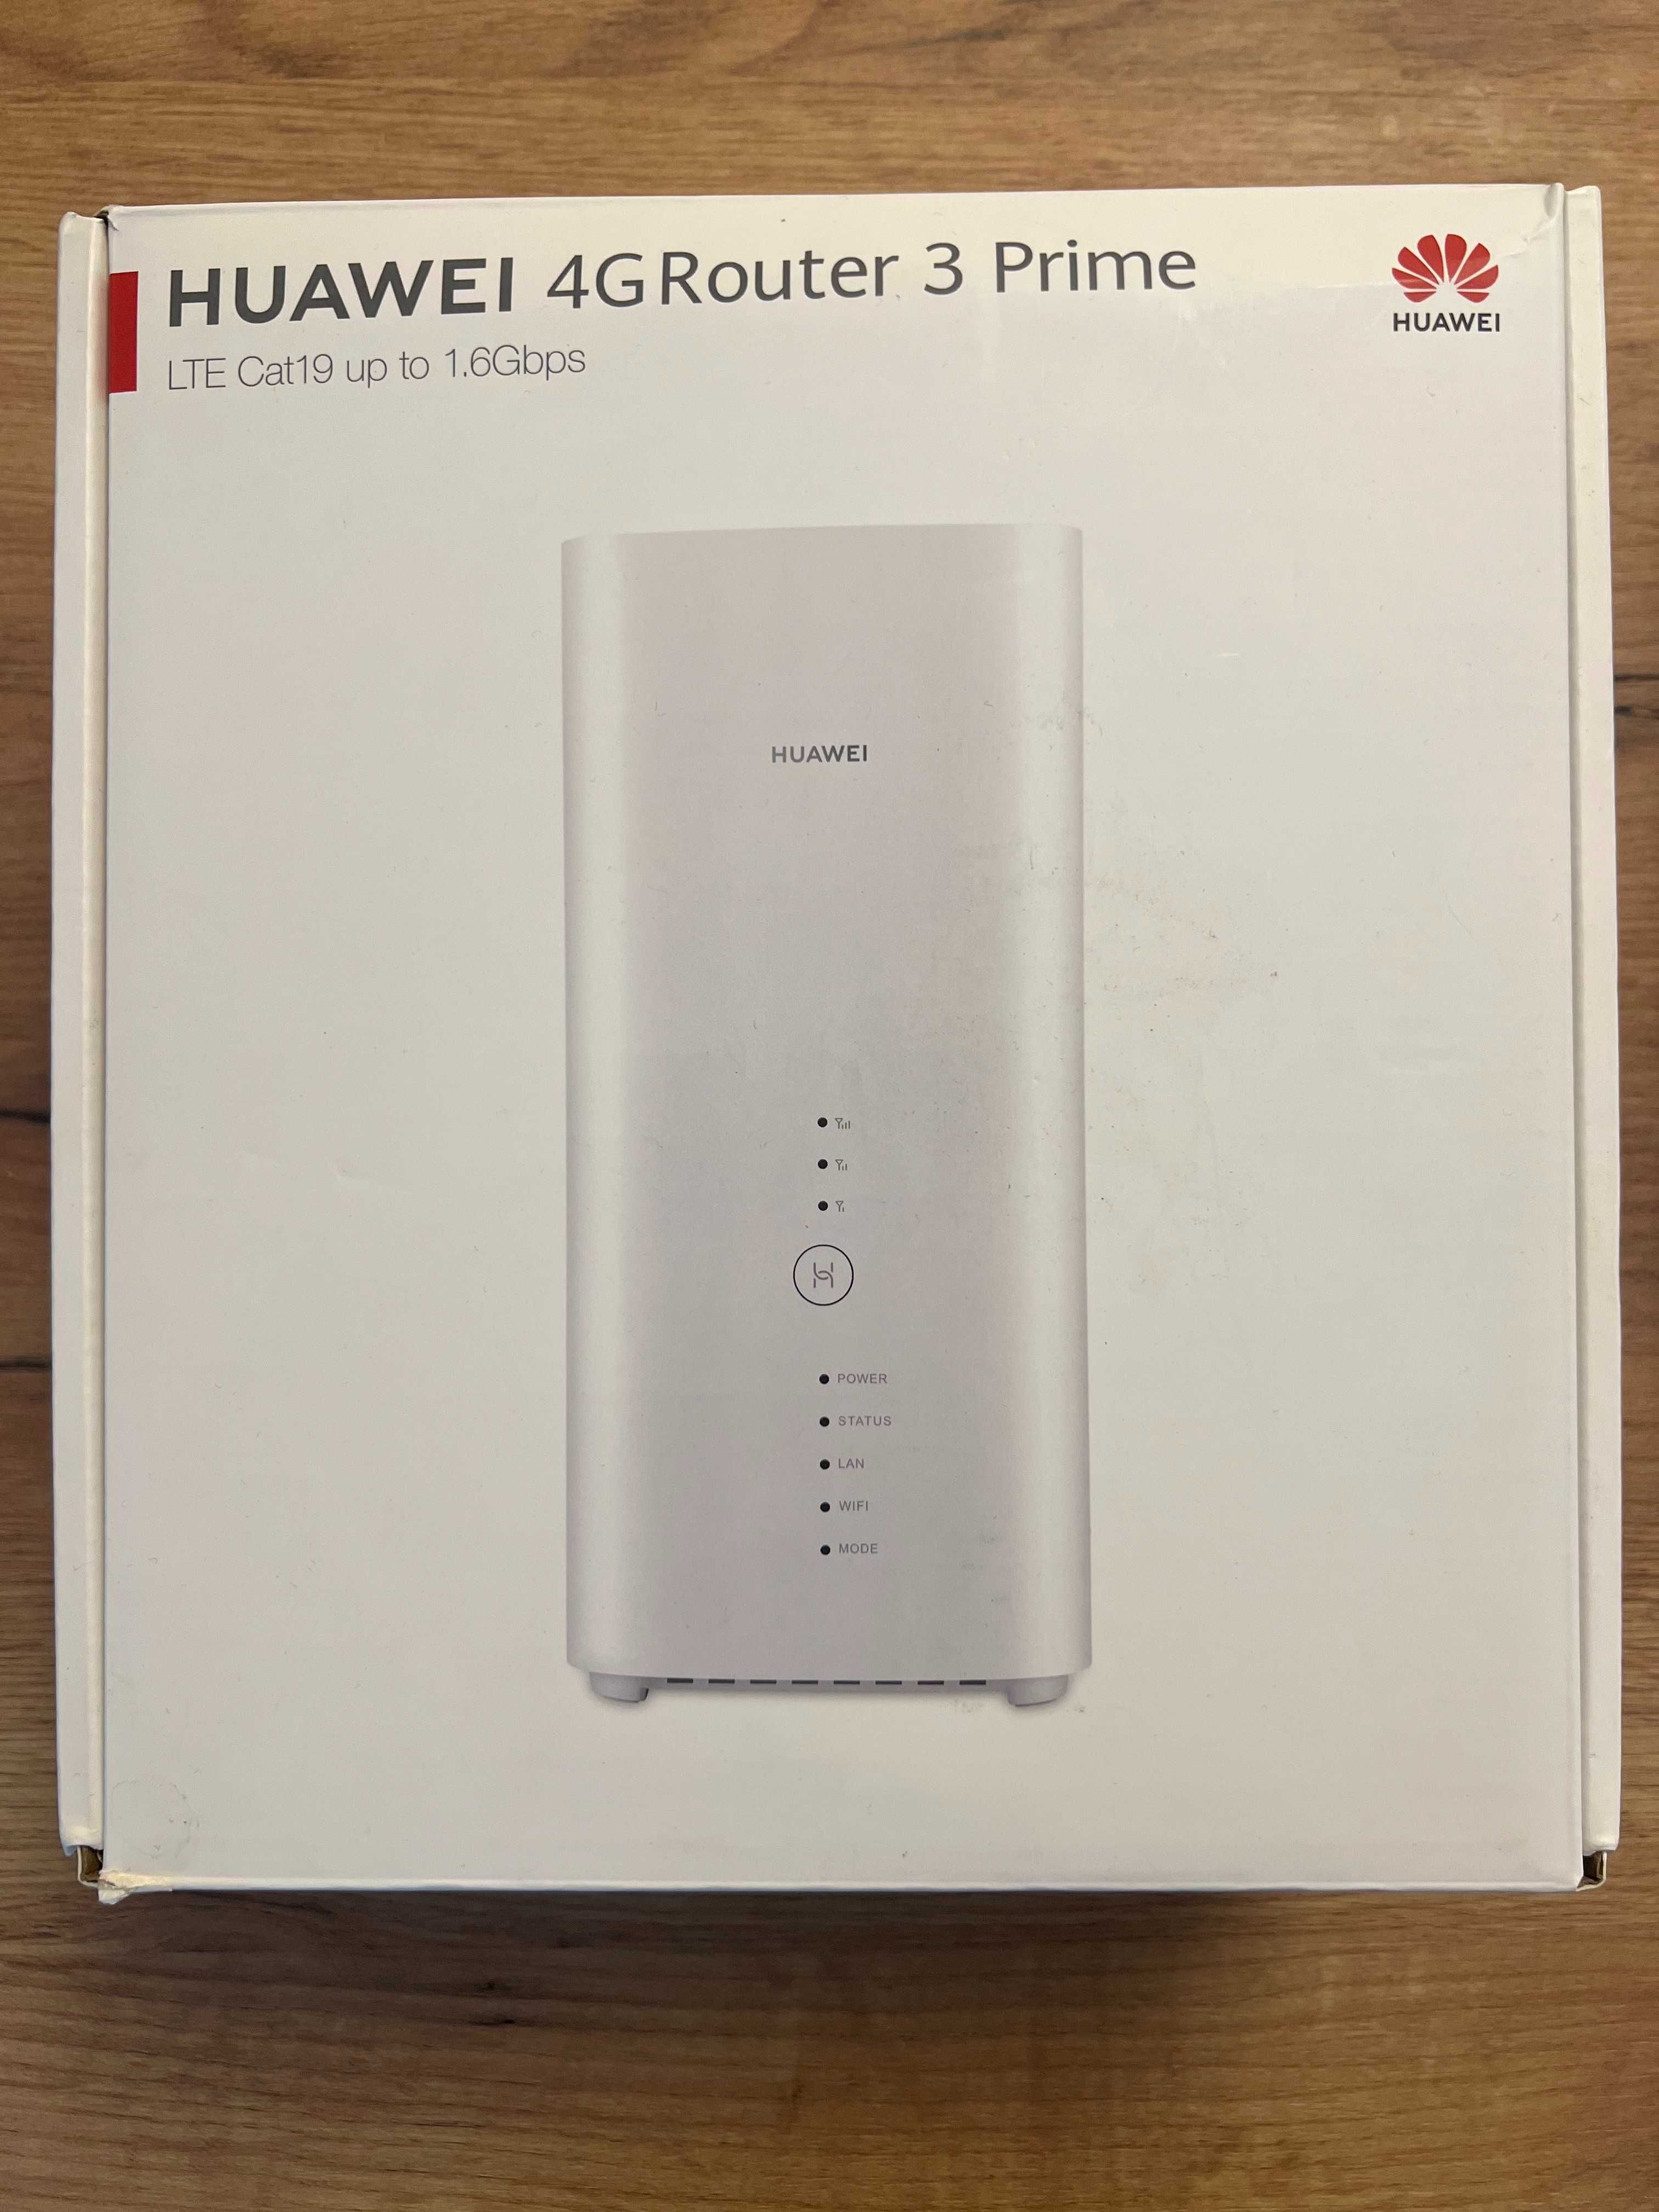 HUAWEI 4G Router